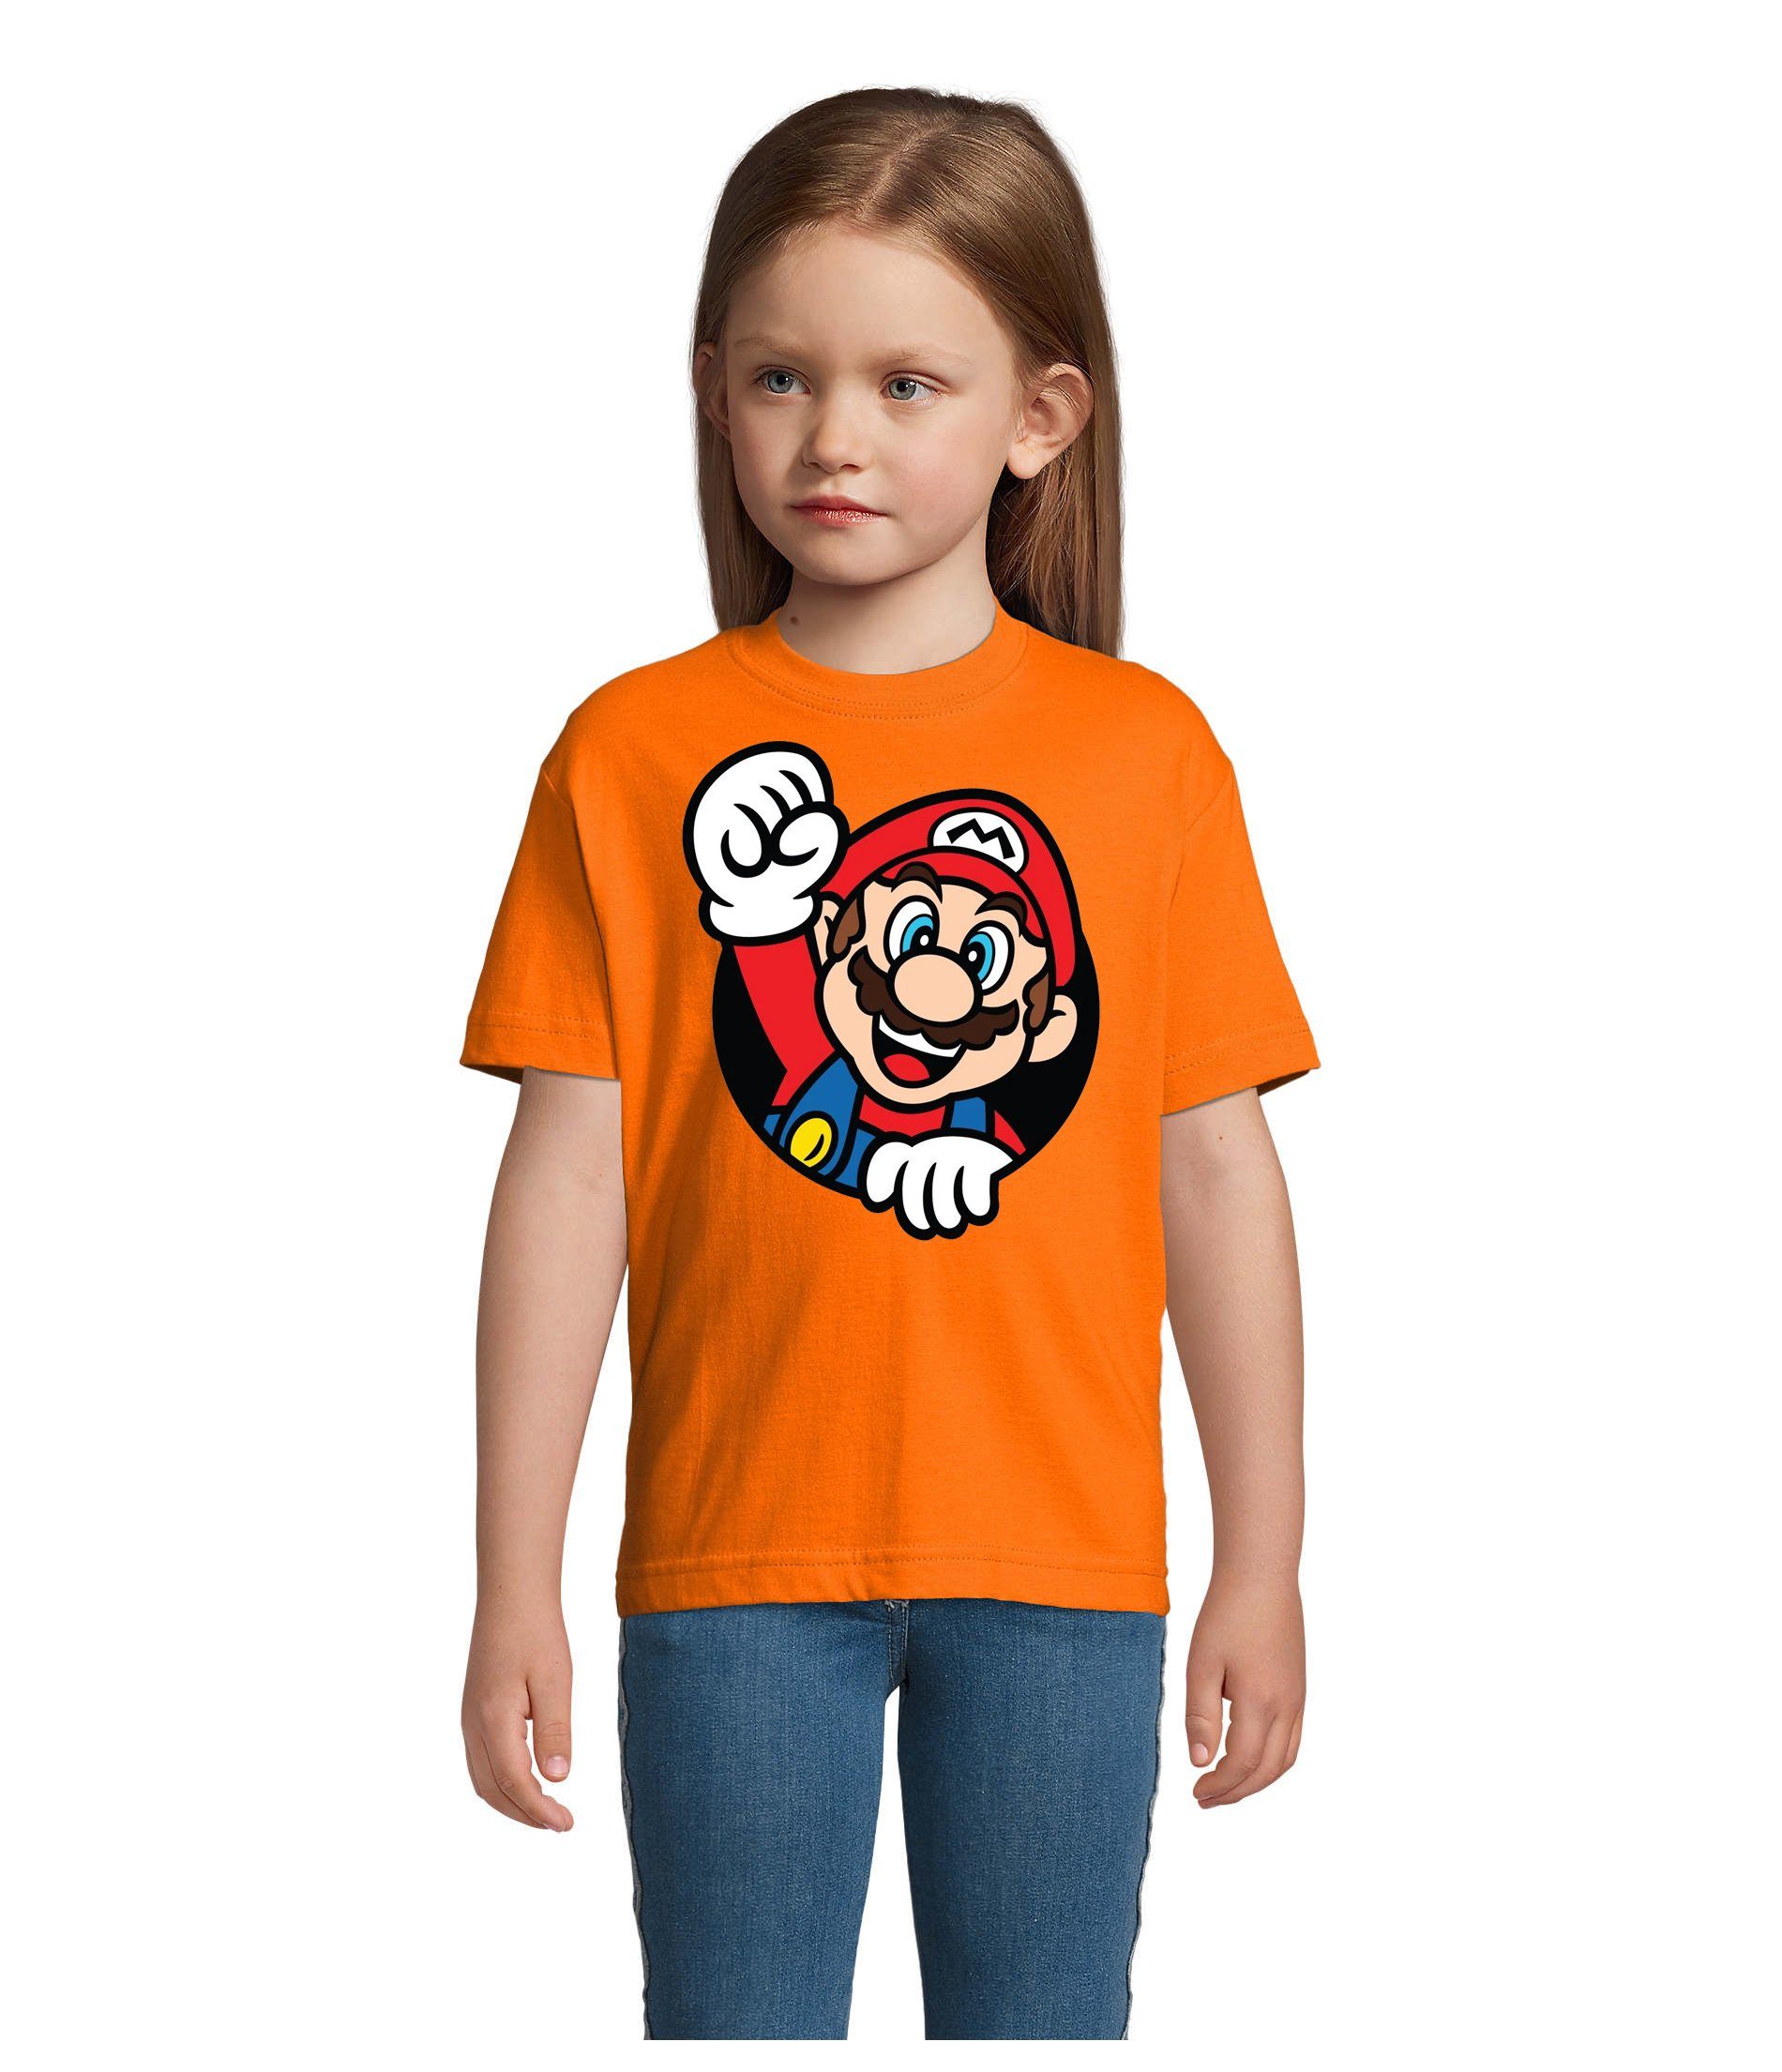 Blondie & Super Gaming Nintendo Faust Kinder Konsole Orange Mario Konsole T-Shirt Spiel Brownie Nerd